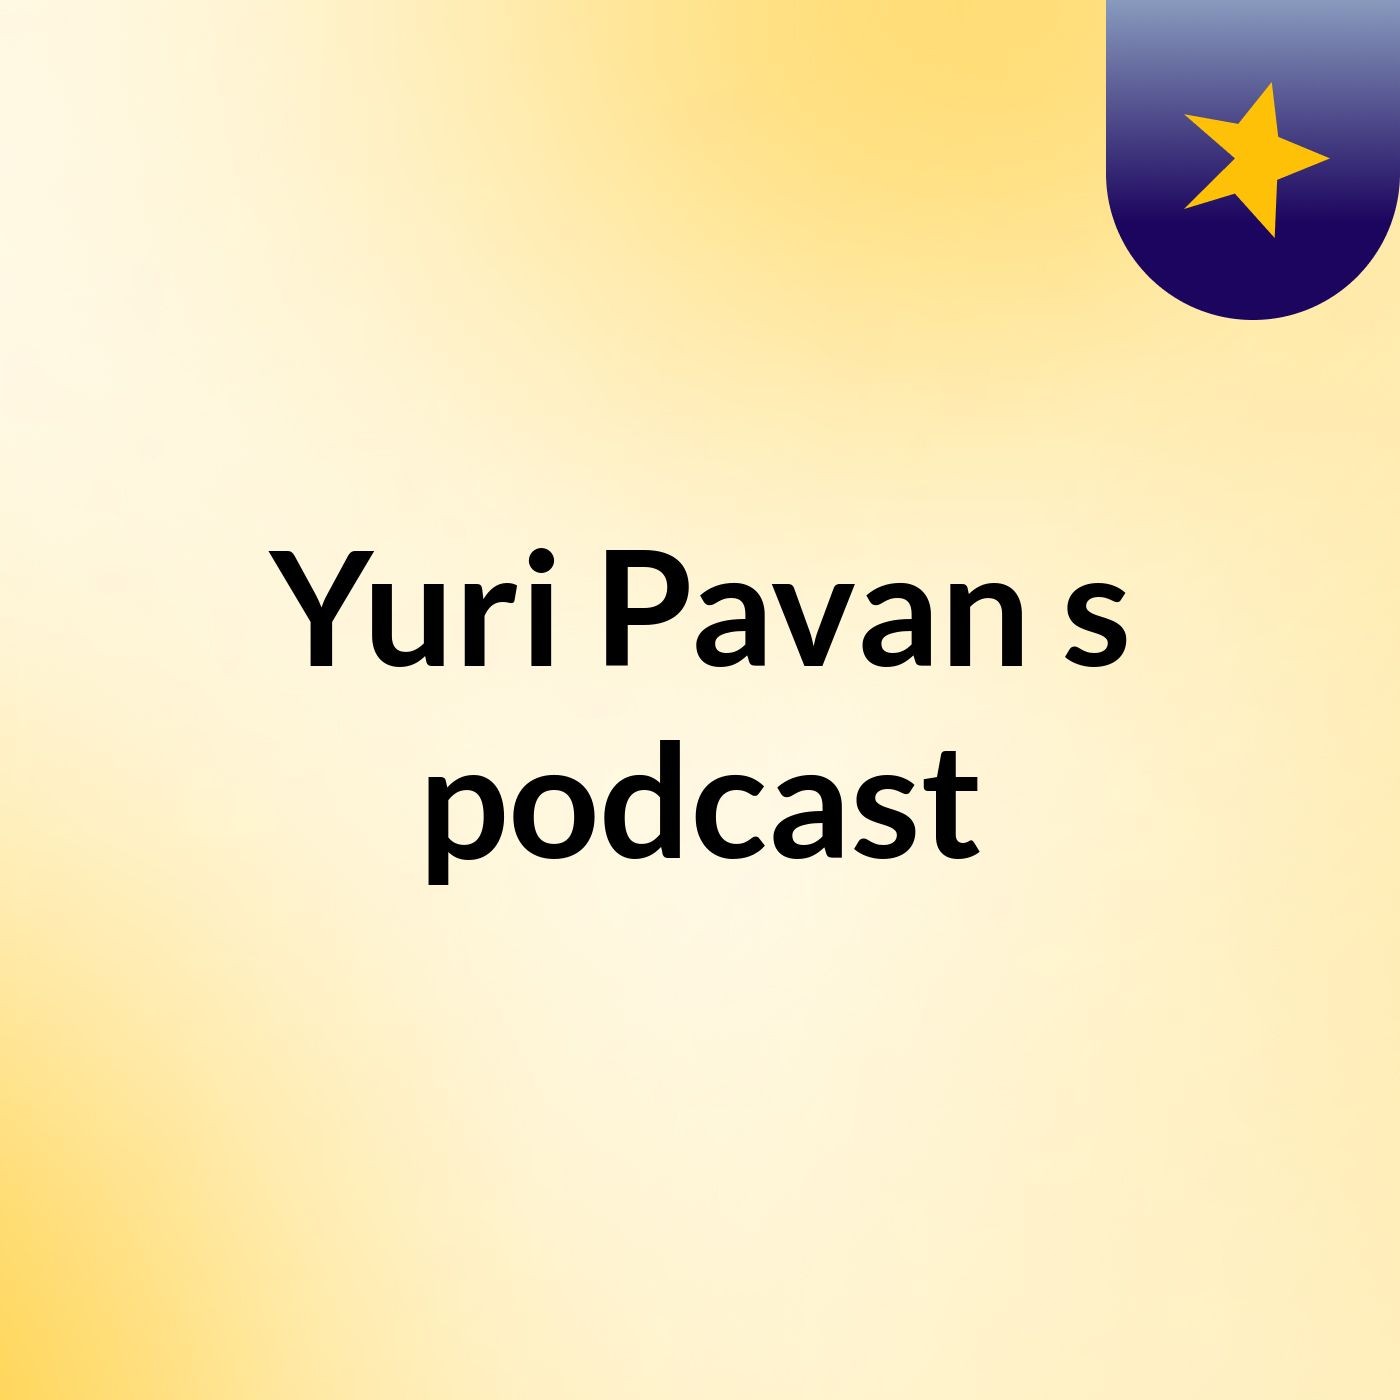 Yuri Pavan's podcast